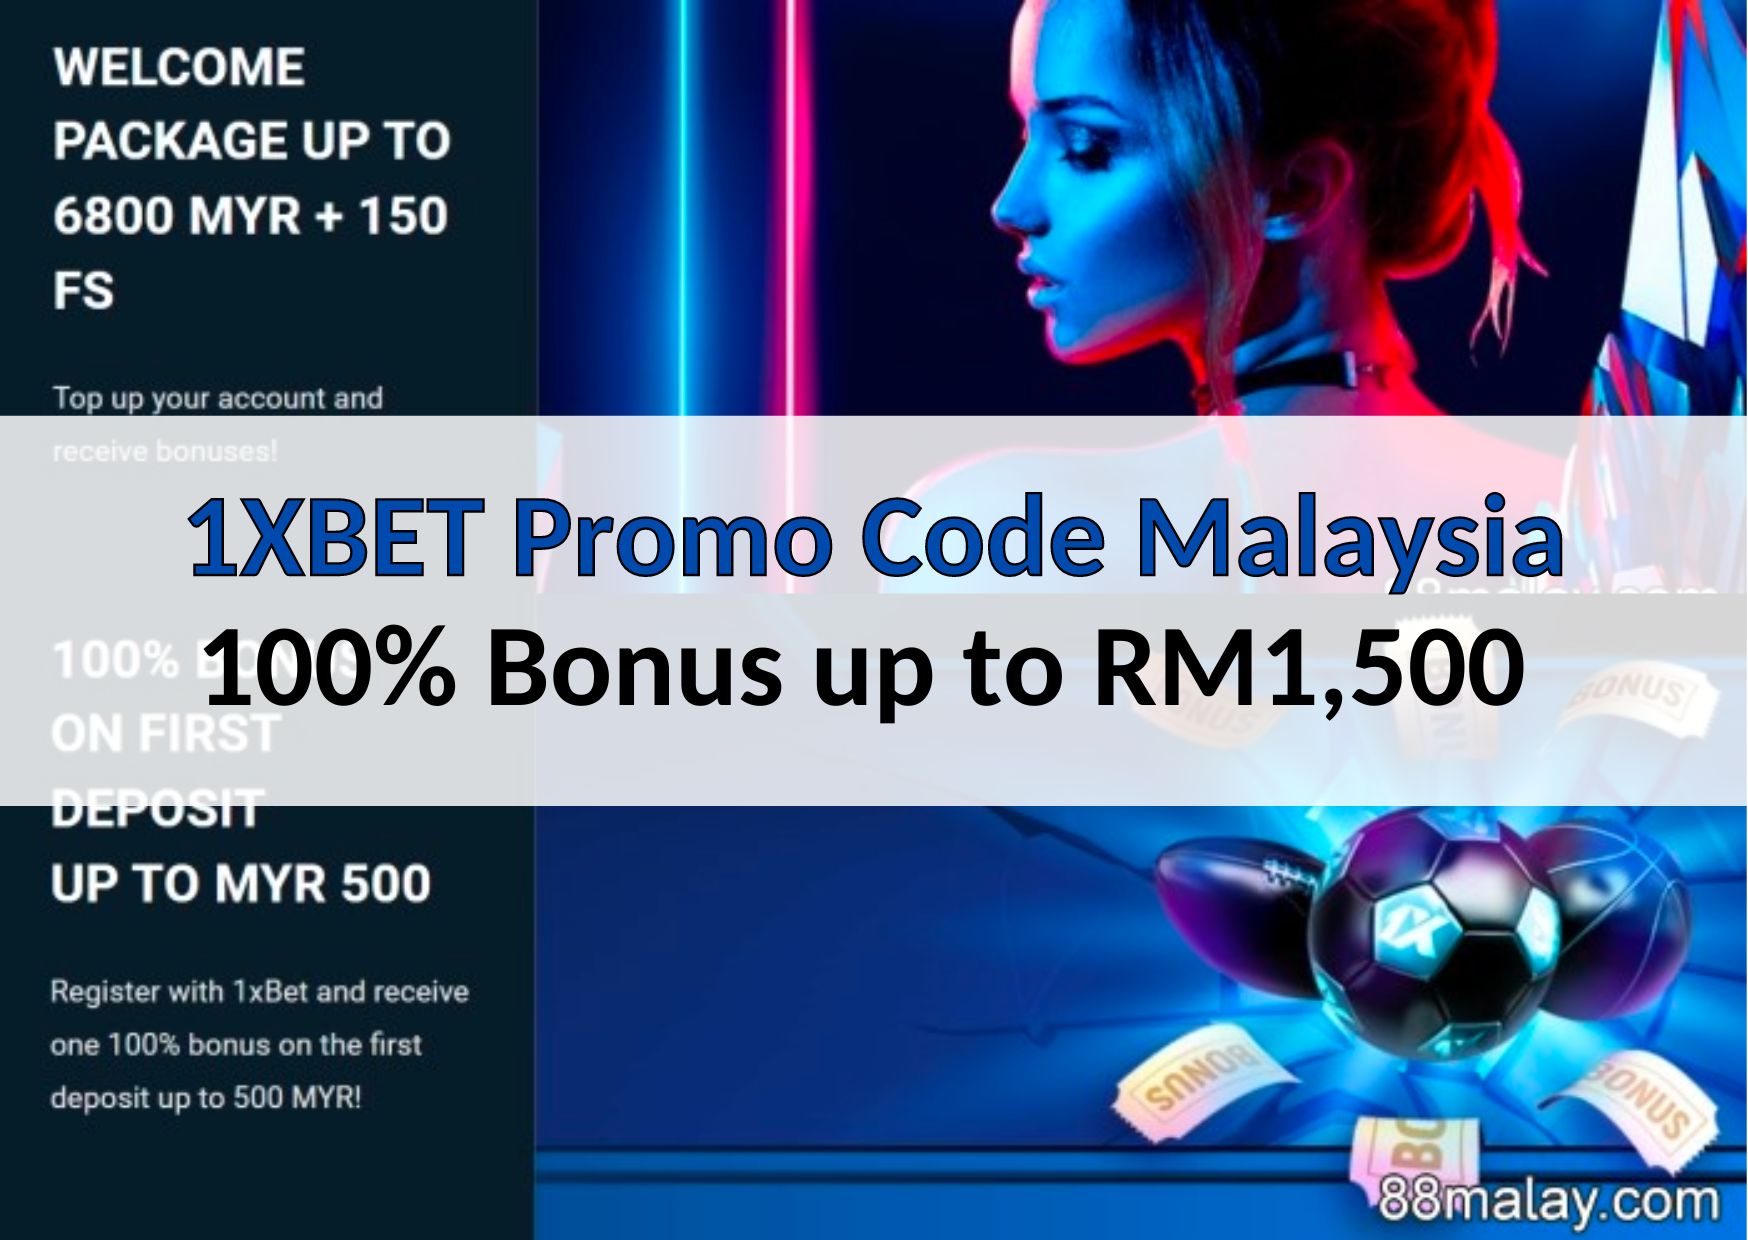 1XBET Promo Code Malaysia – 100% Bonus up to €300 (RM1,500)